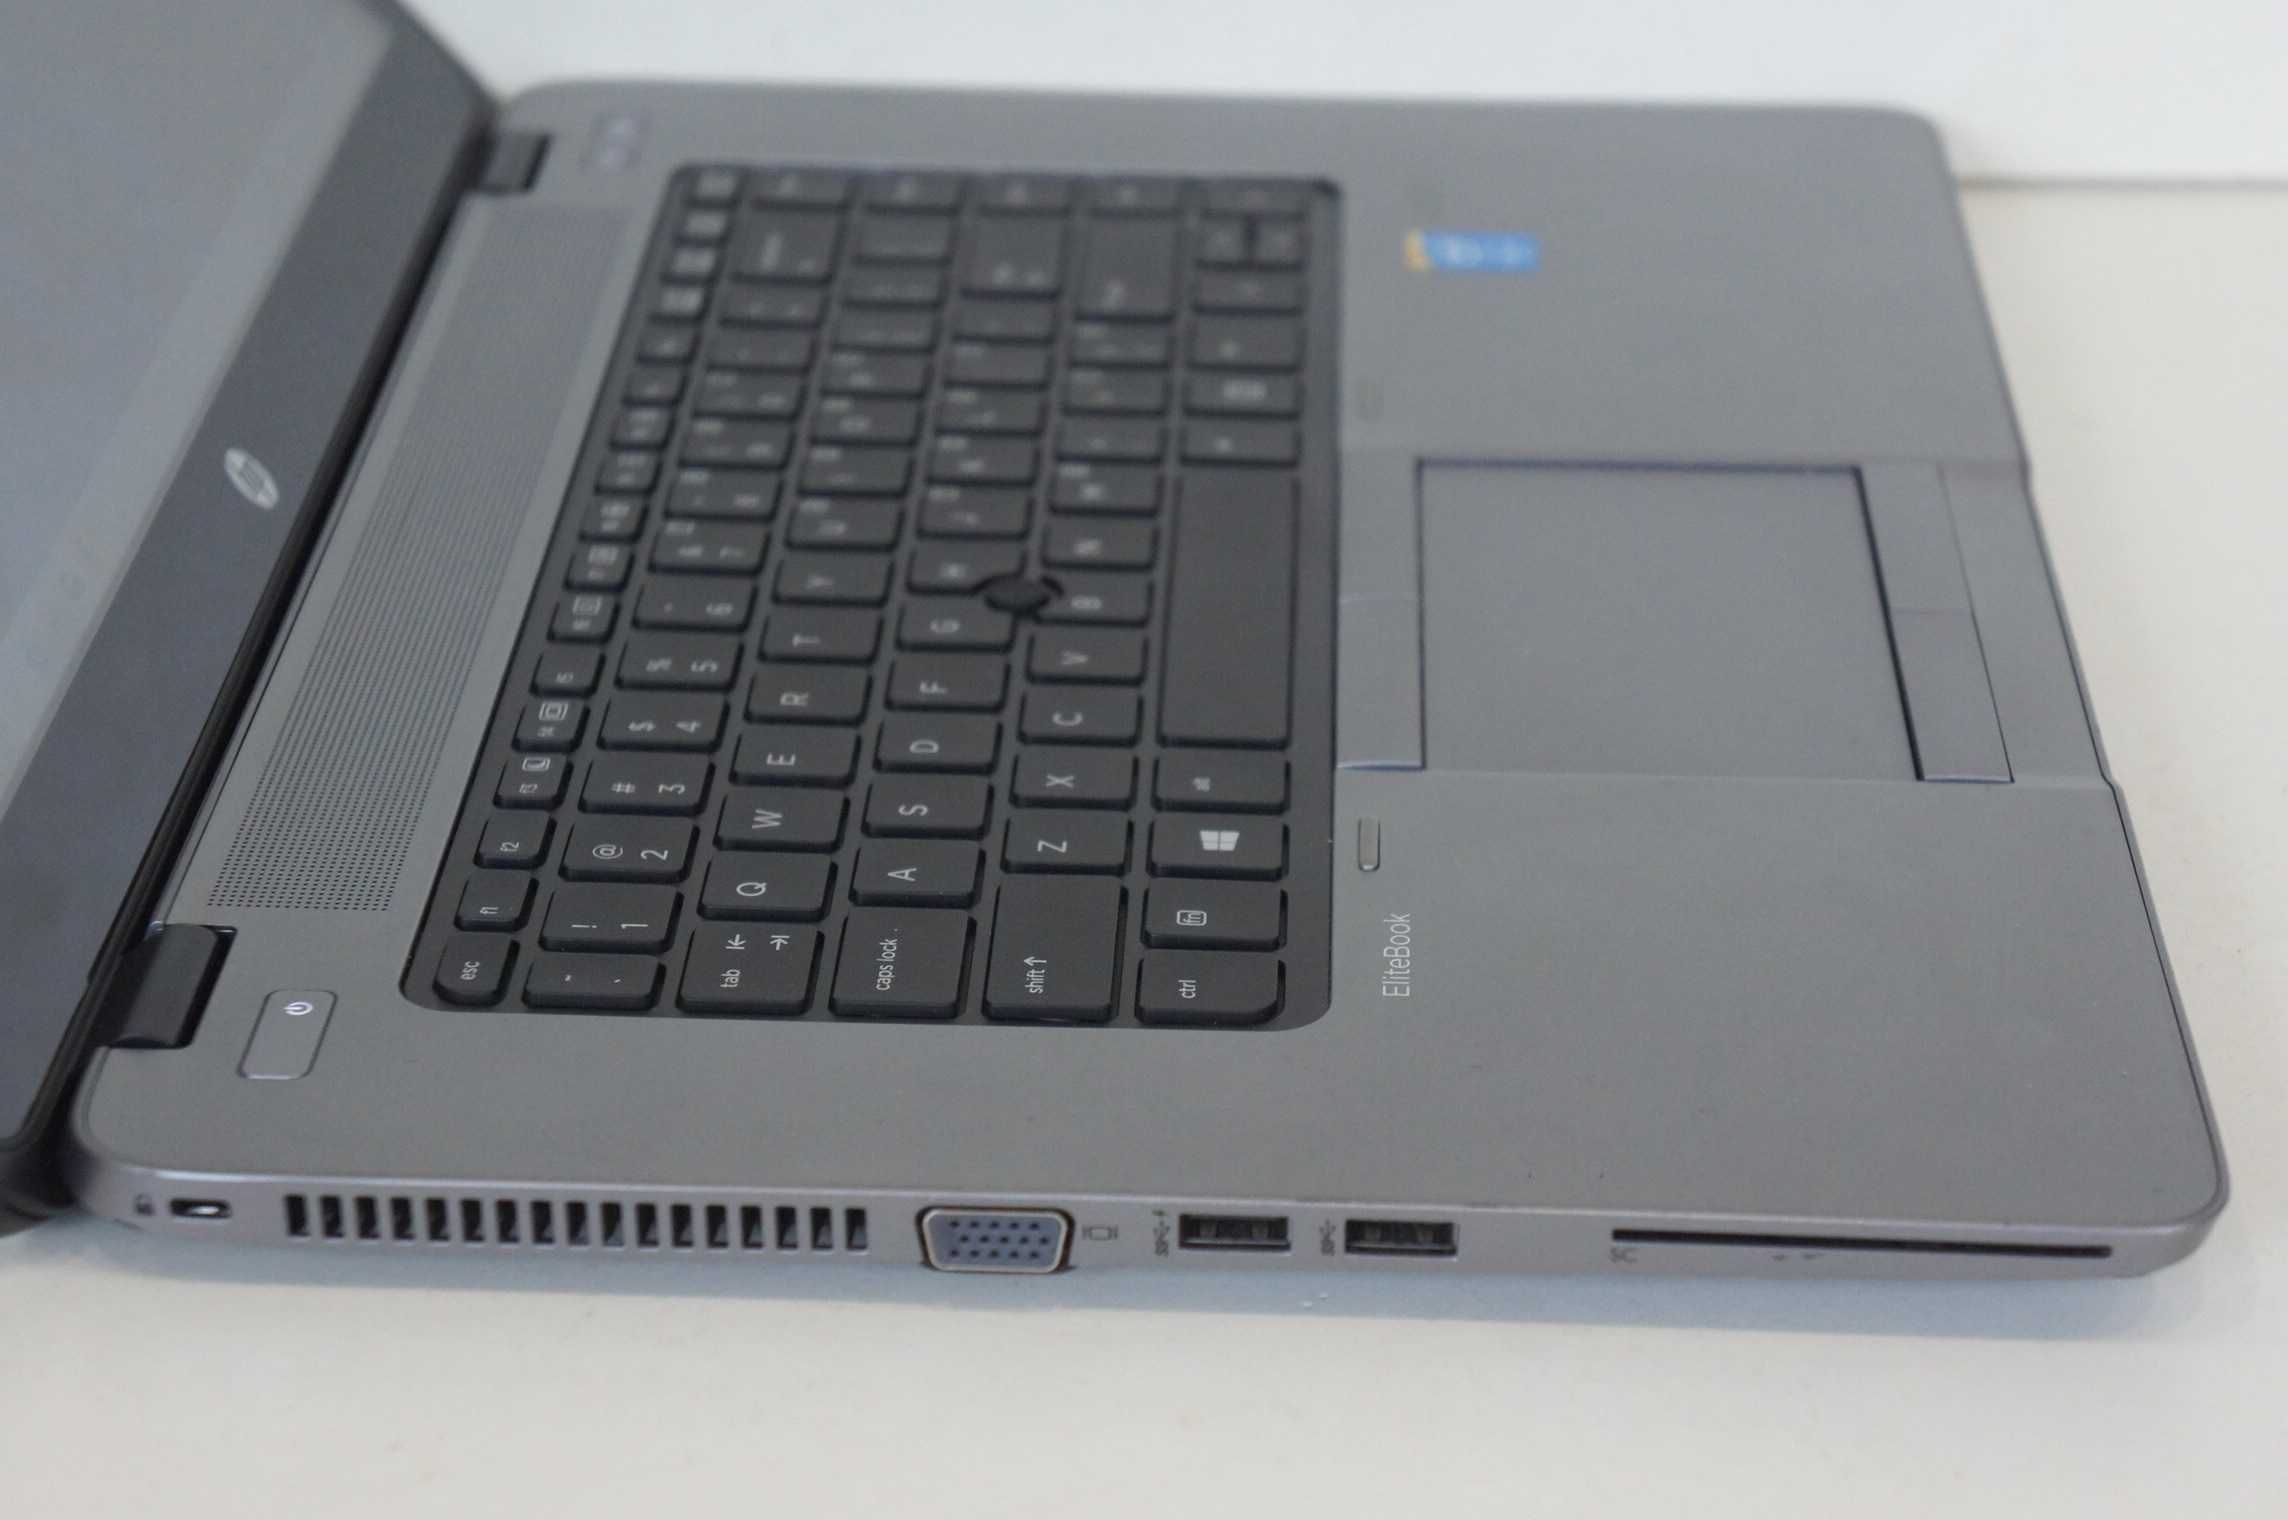 HP EliteBook 850 Core i5-4310U 8GB 256GB 15,6" 1920x1080 Touch Win10